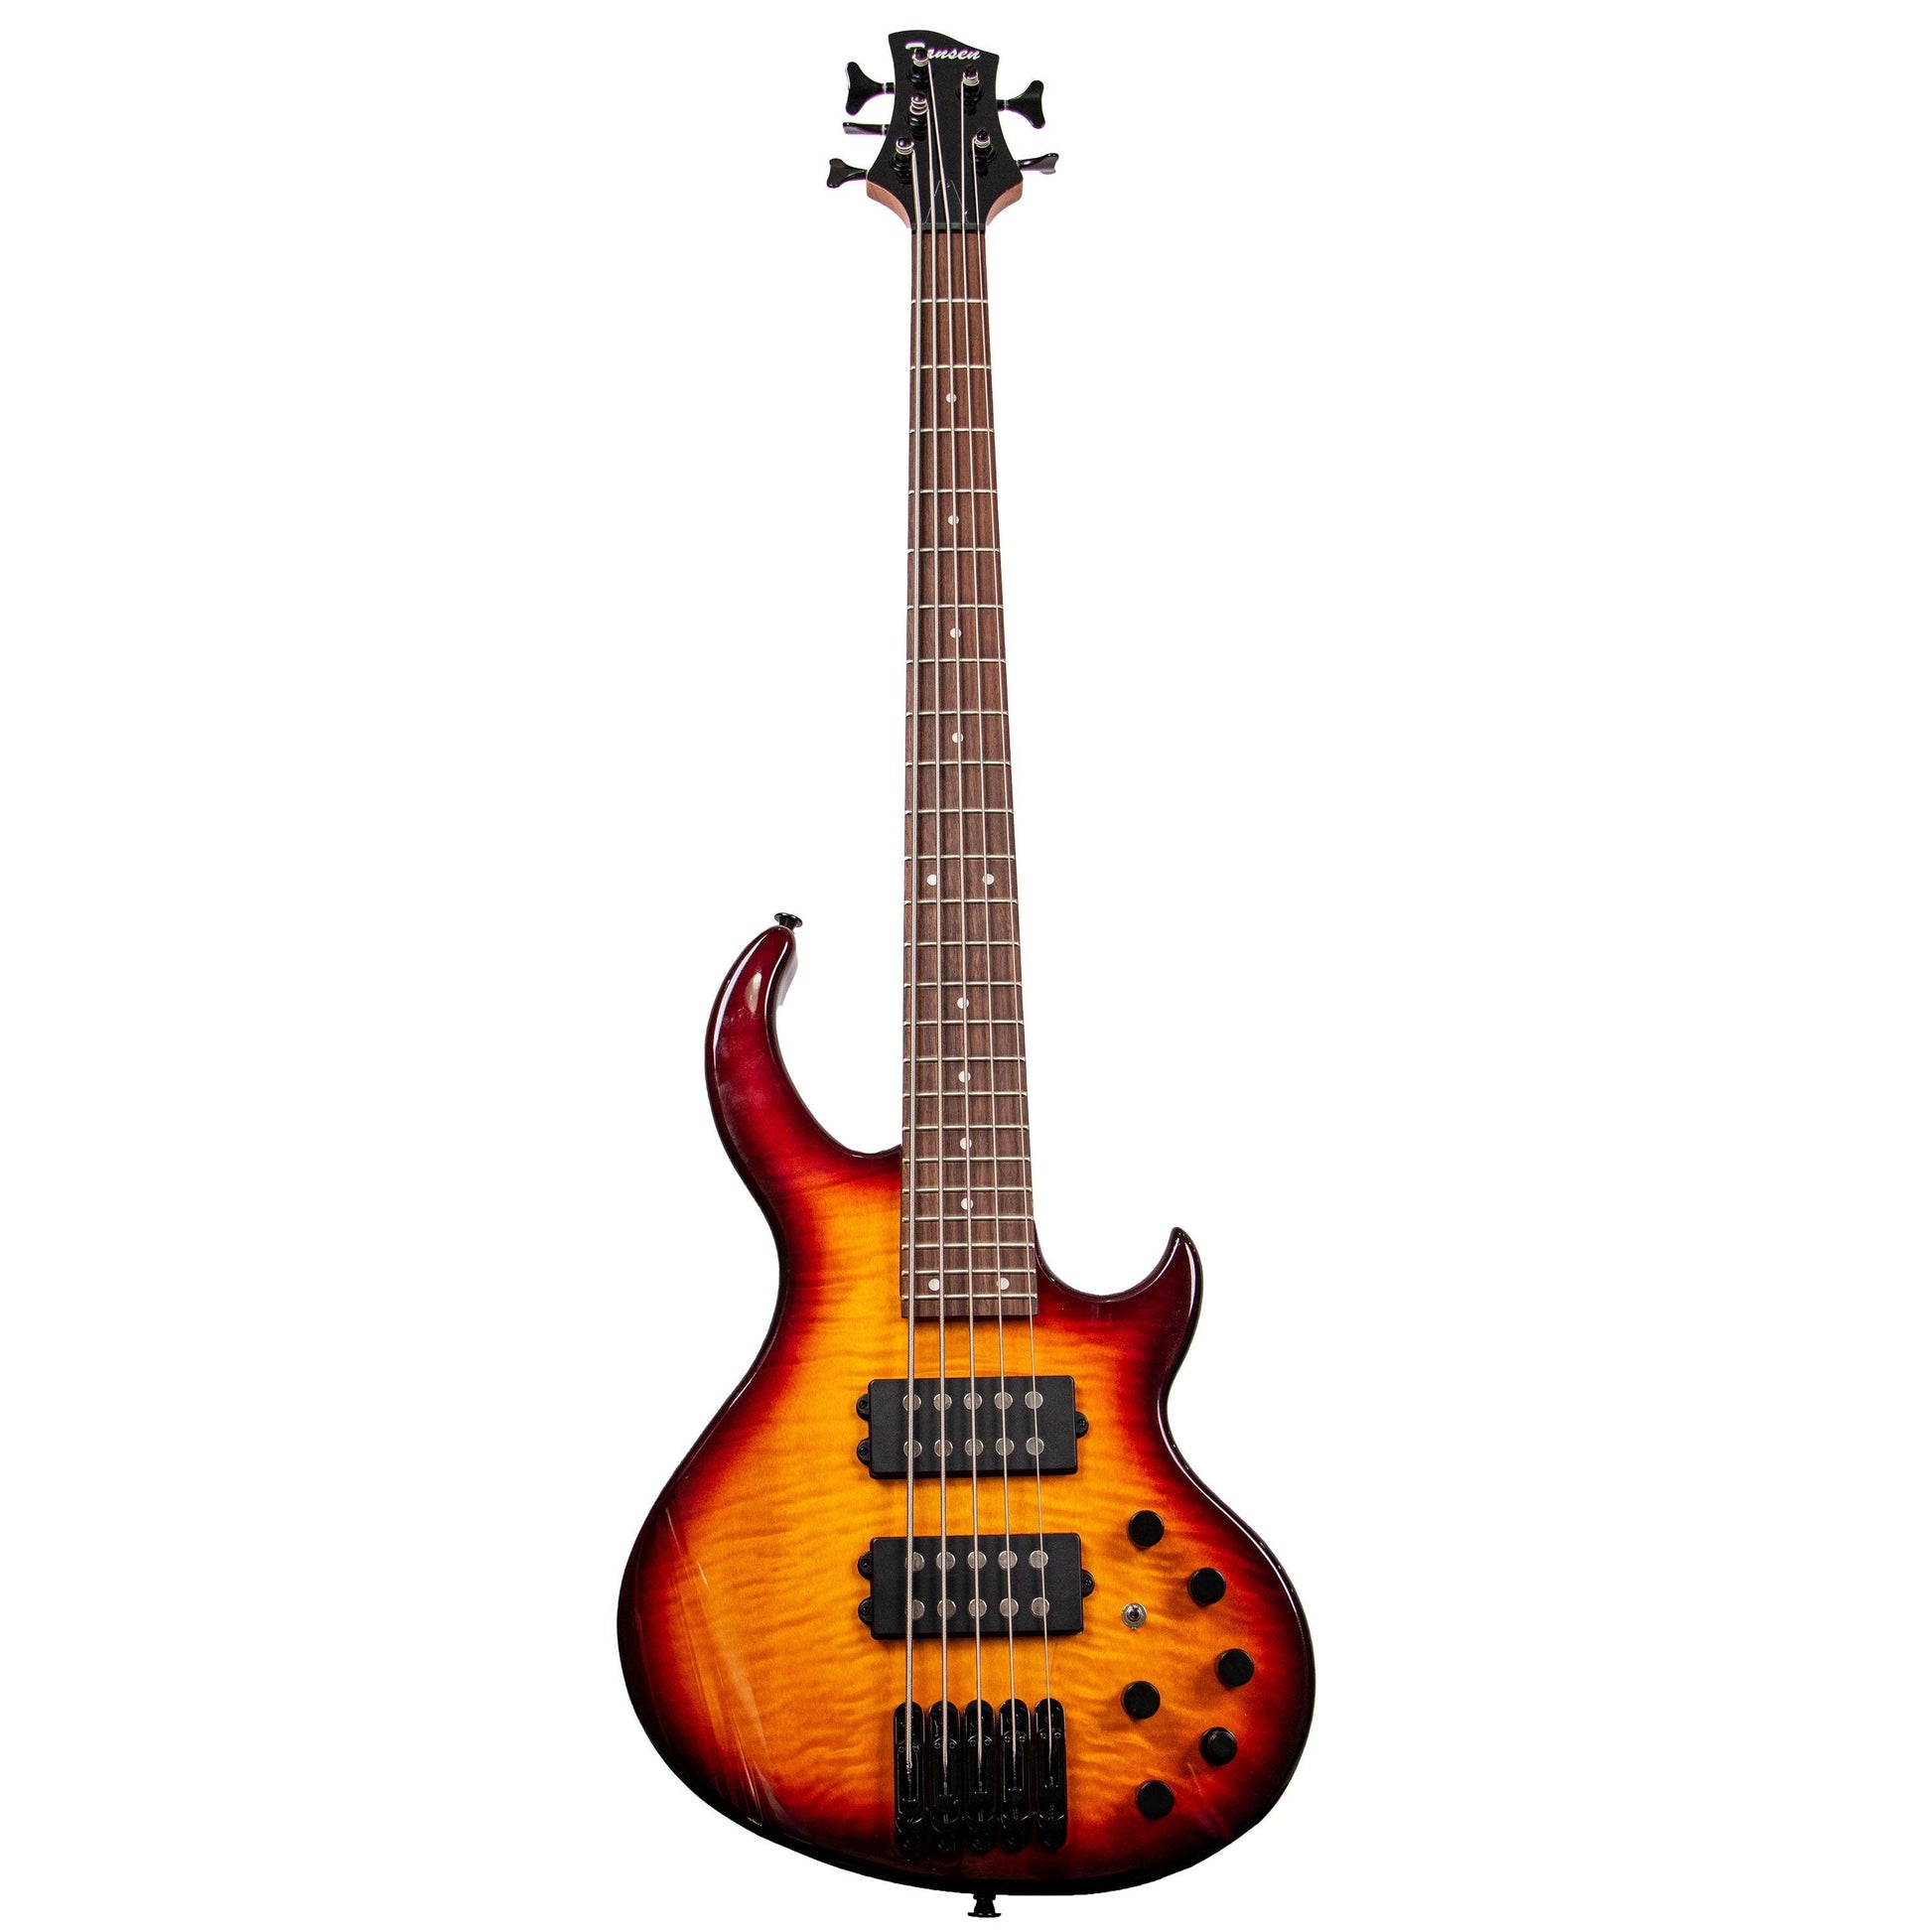 Tansen B555 Guitar Bass Electric 5-String Laurel Fingerboard HH Pickups Red